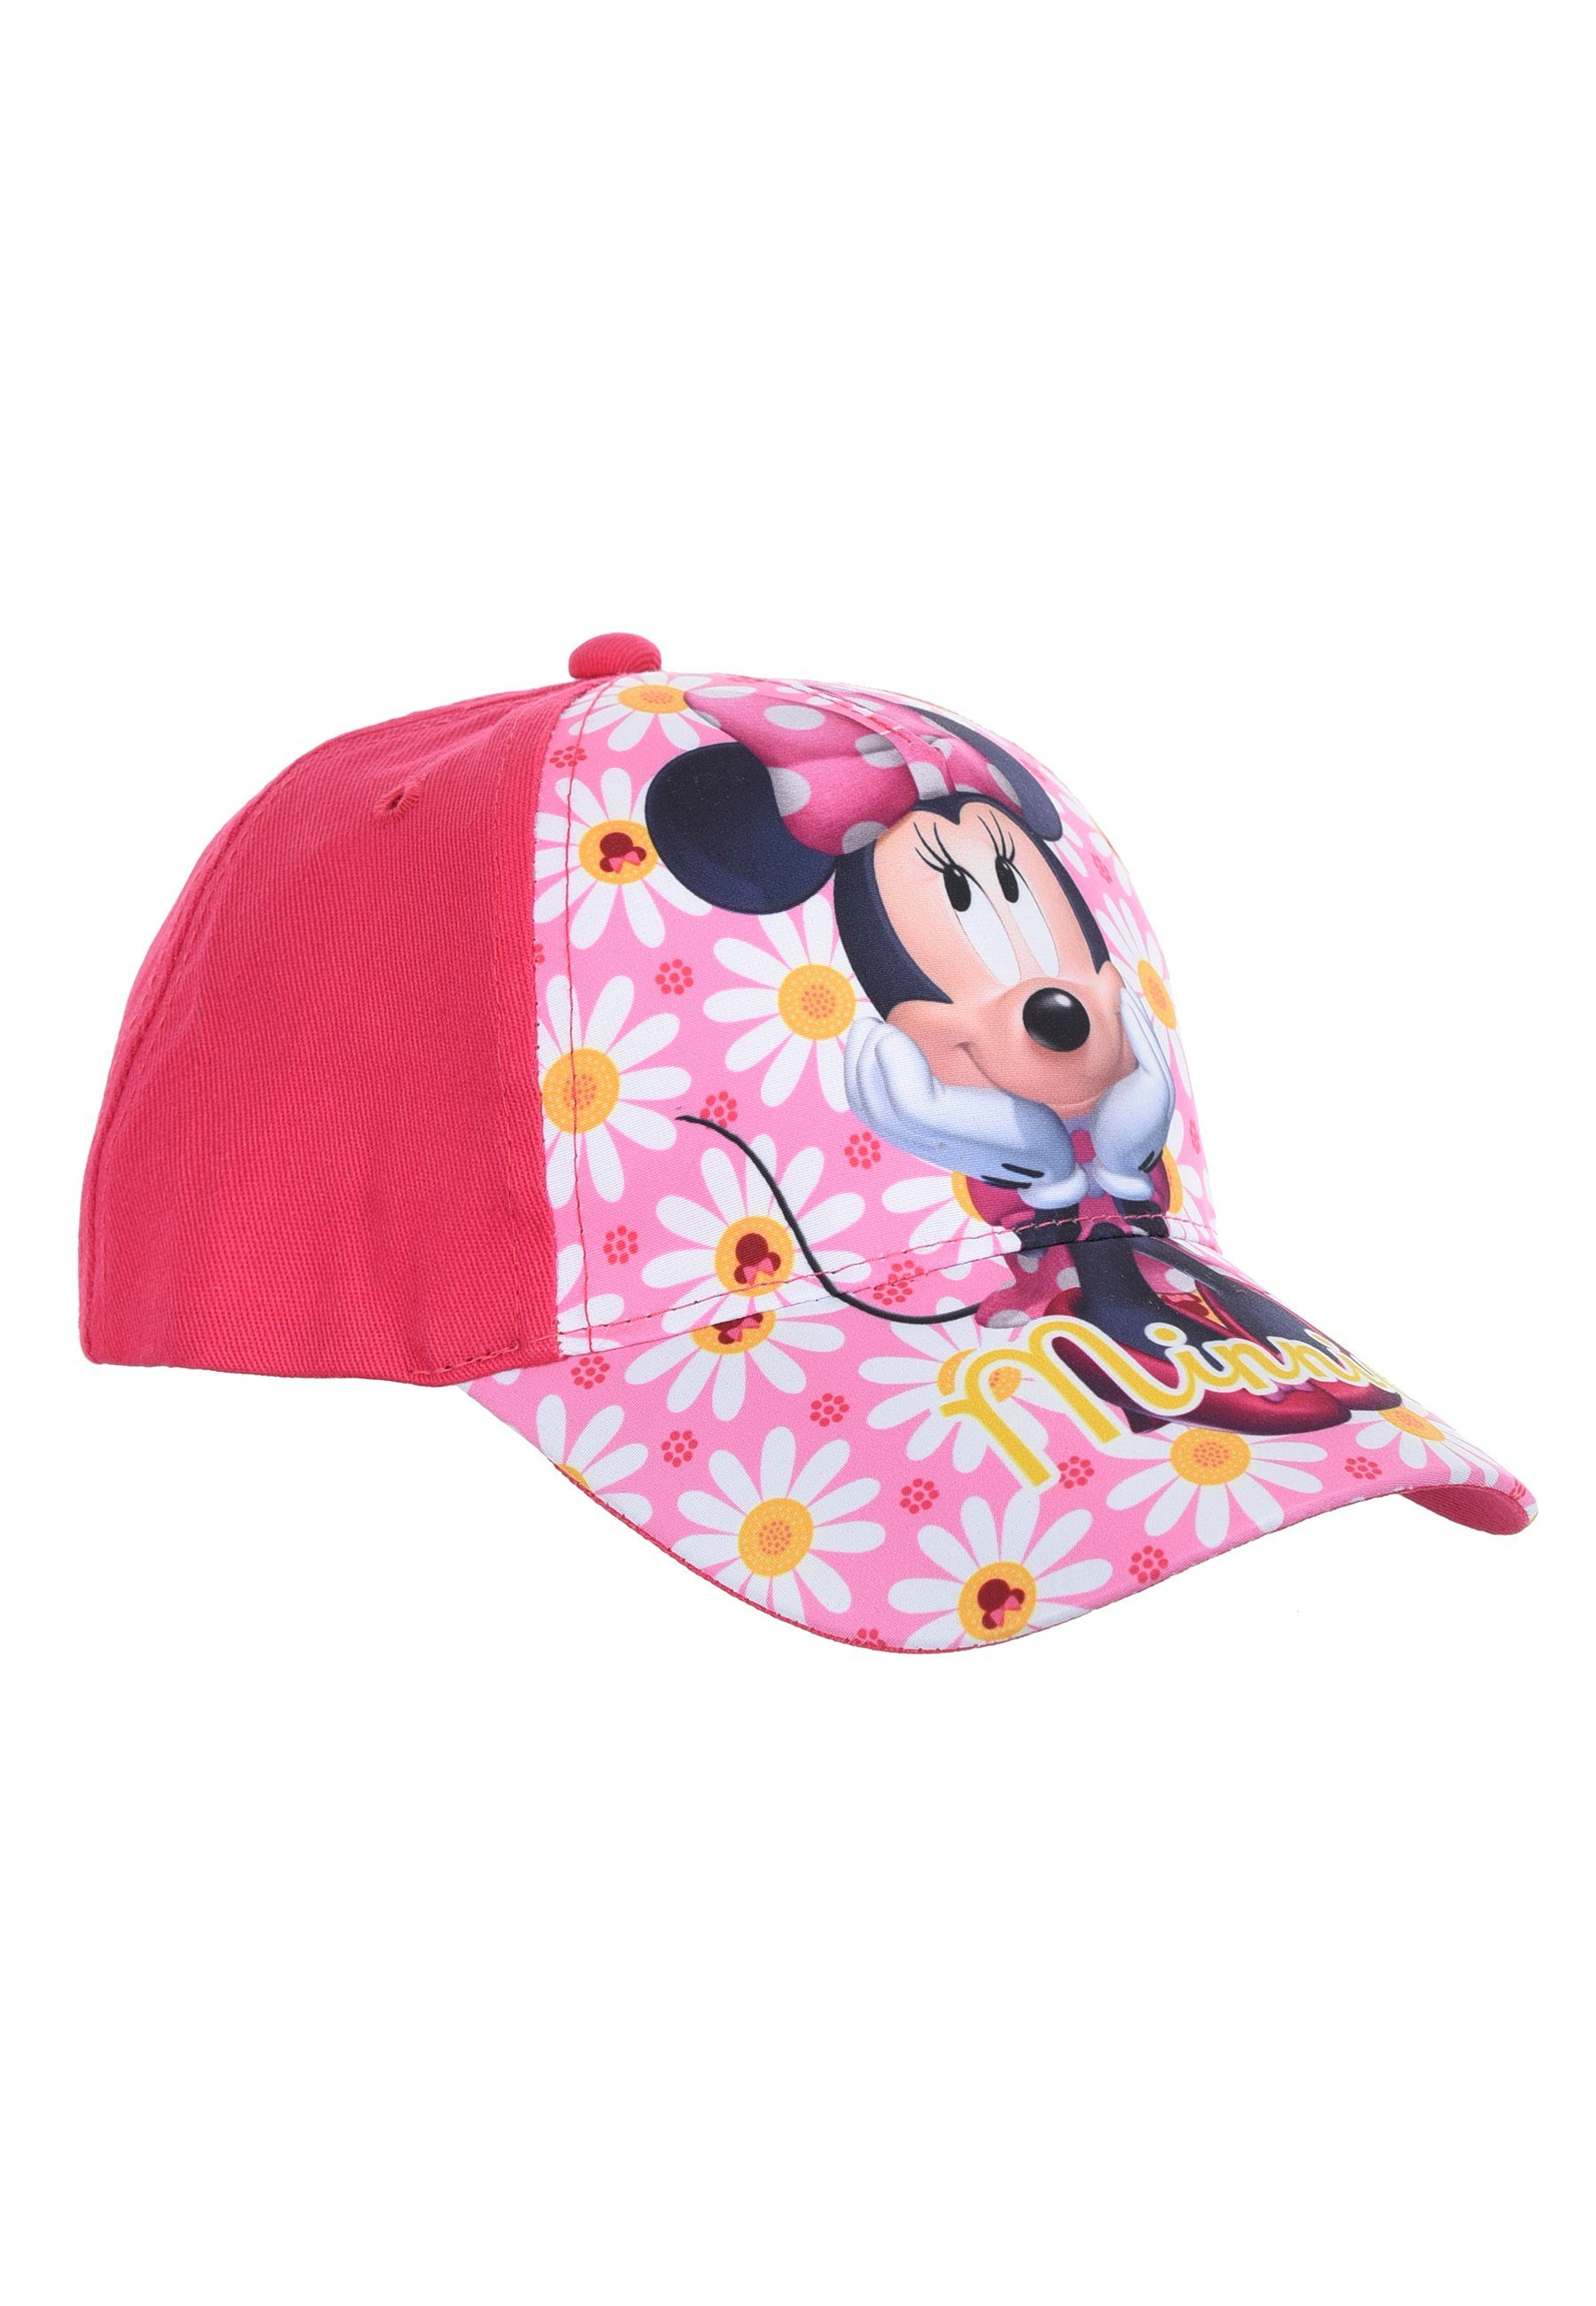 Minnie Cap Kappe Mütze Disney Minnie Mouse Baseball